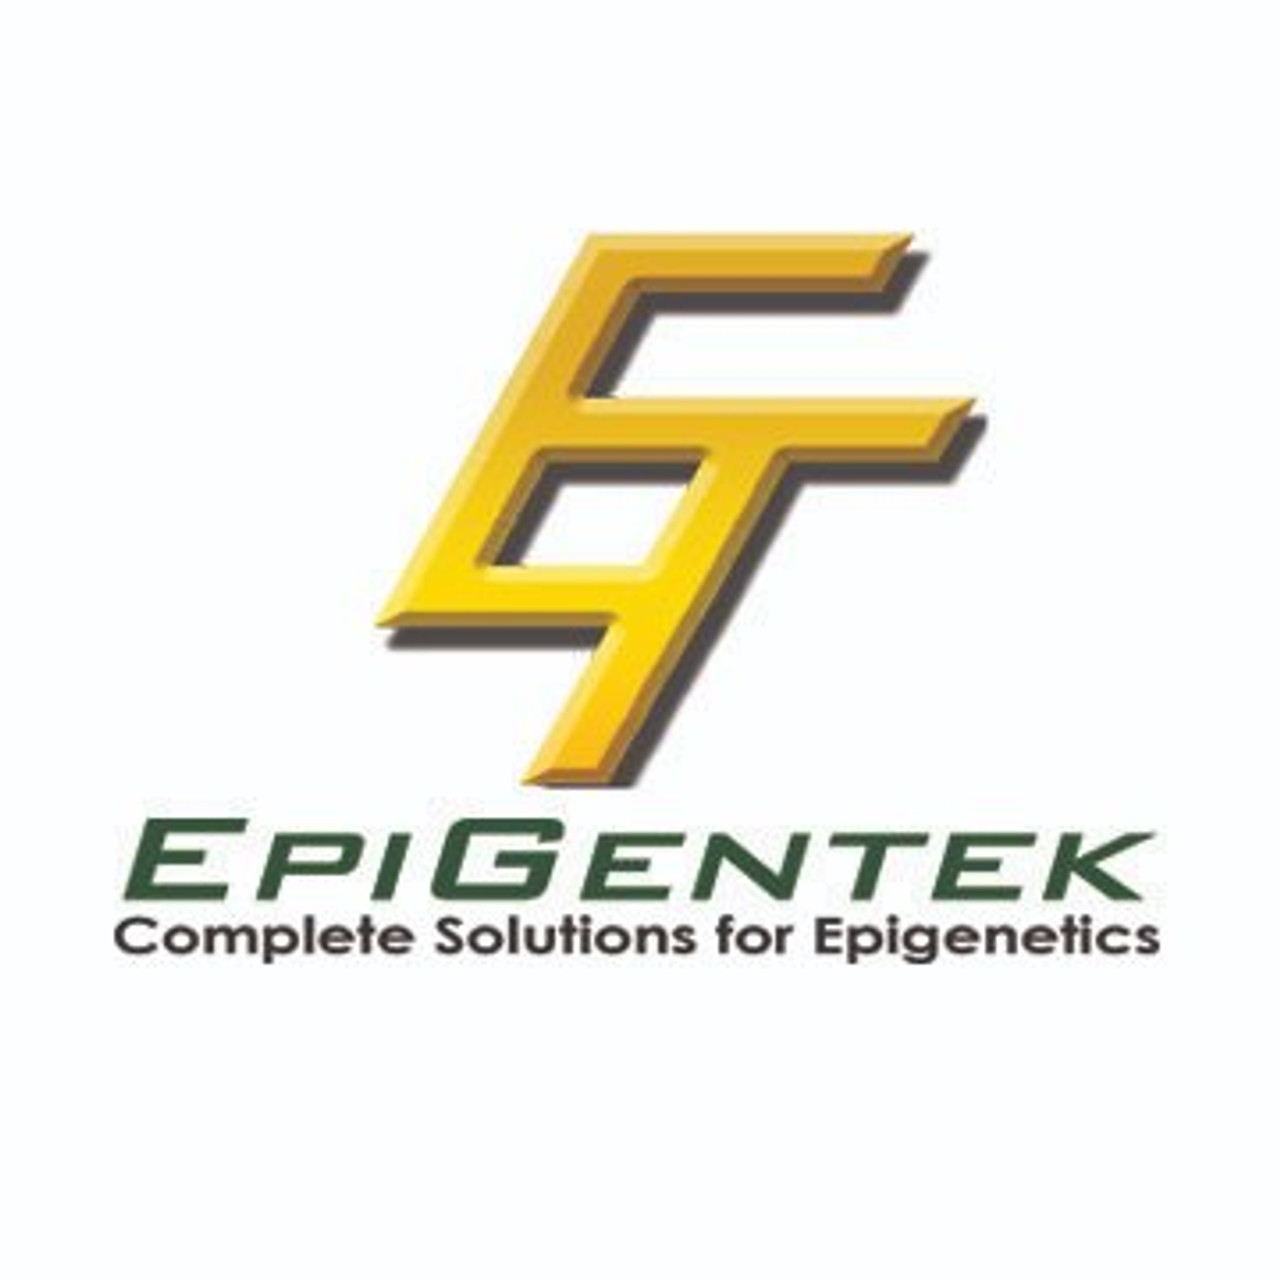 QuantiSir Specific Gene Knockdown Quantification Kit For Epigenetic Regulators - MeCP2